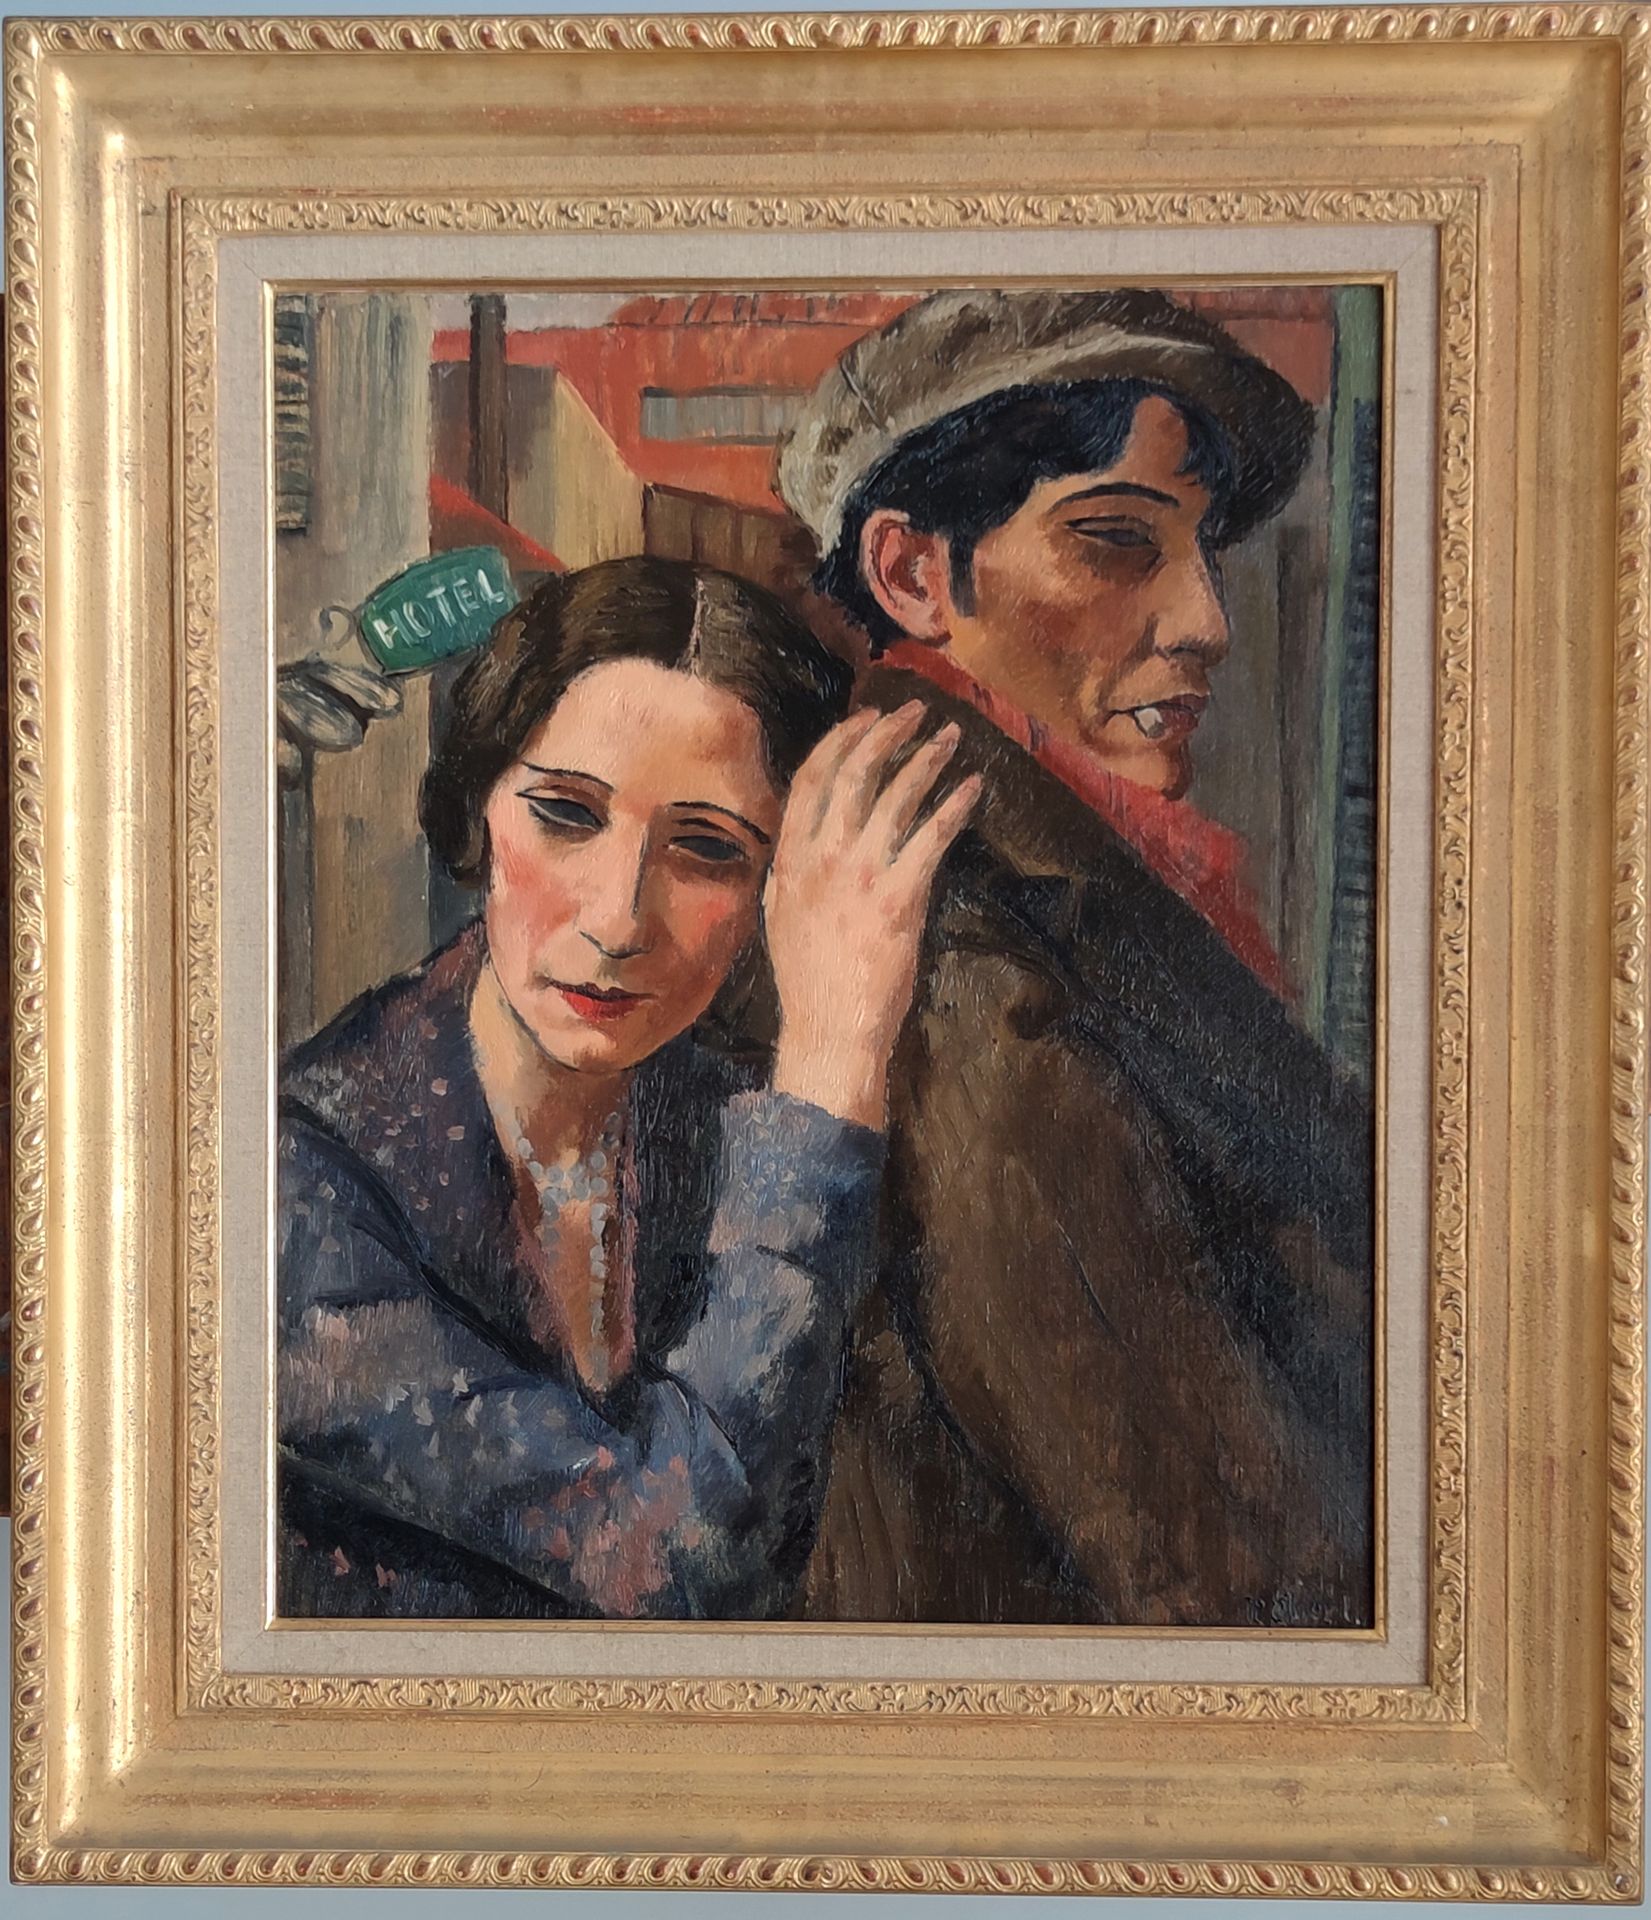 Null 
弗朗索瓦-莫里斯-奥古斯丁-埃伯尔(1887-1962)

我的男人，约1933年

布面油画，右下角有签名

65 X 54厘米

出处：1969&hellip;